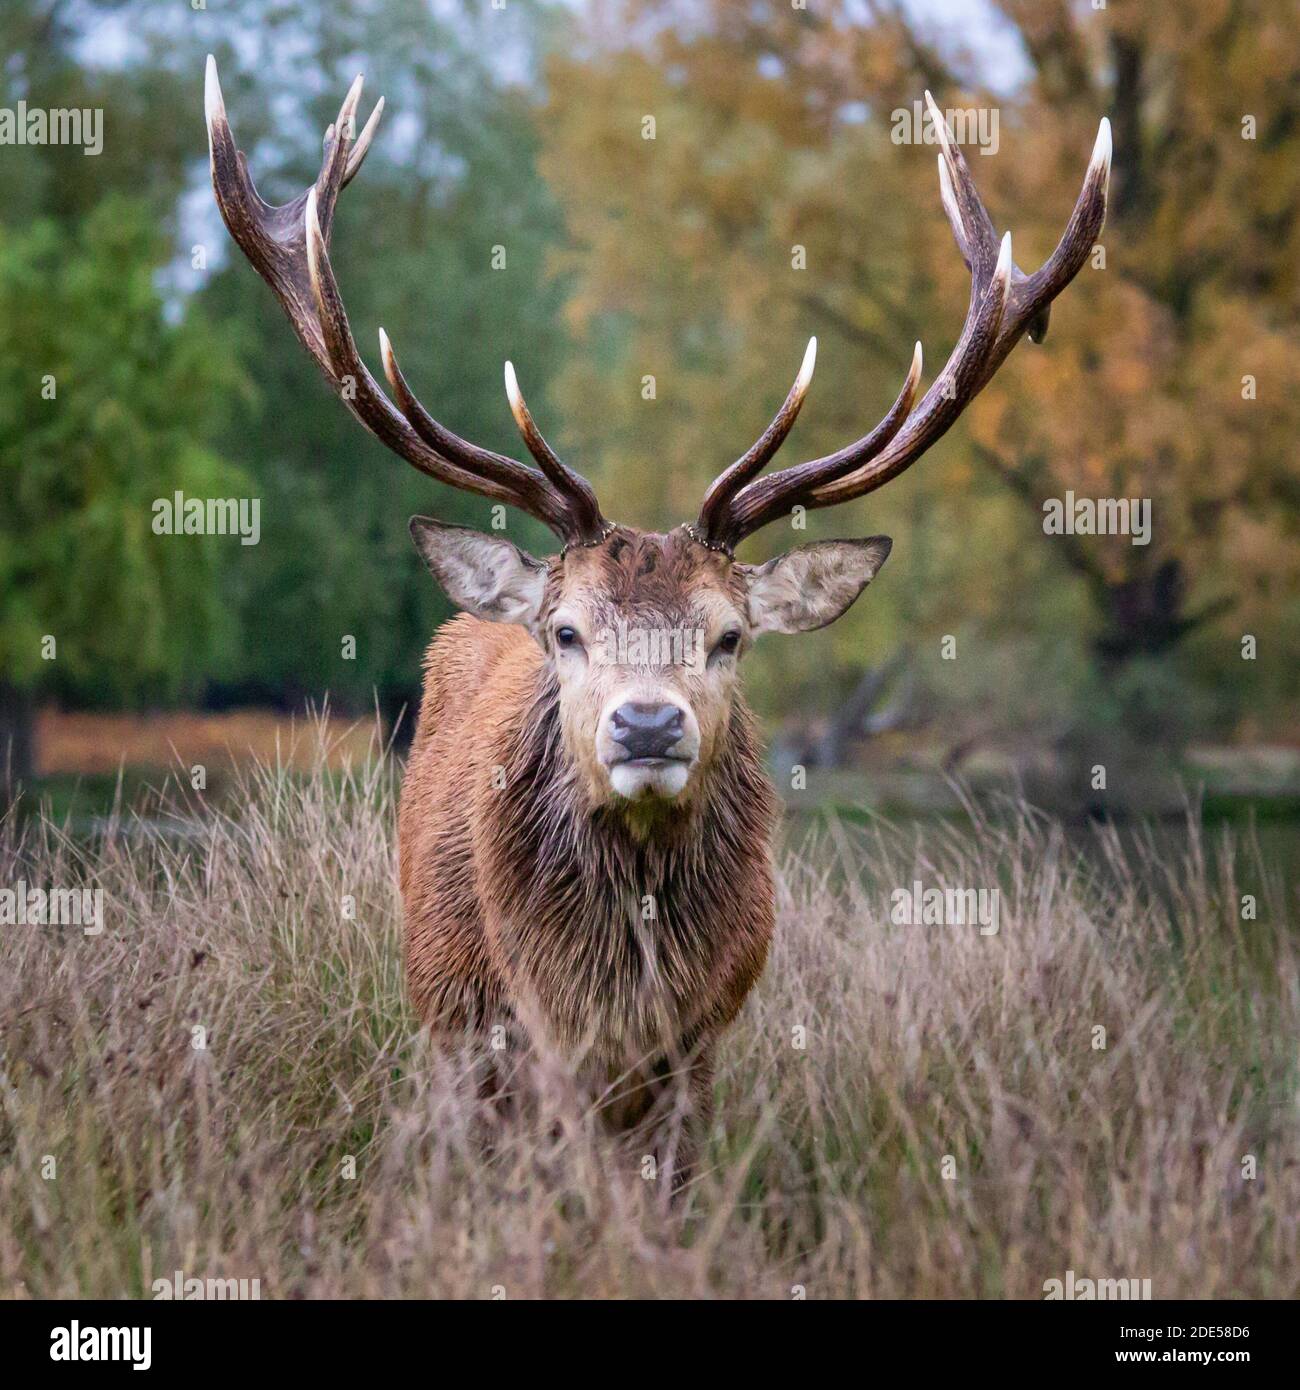 Red deer in long grass in Bushy Park, West London Stock Photo